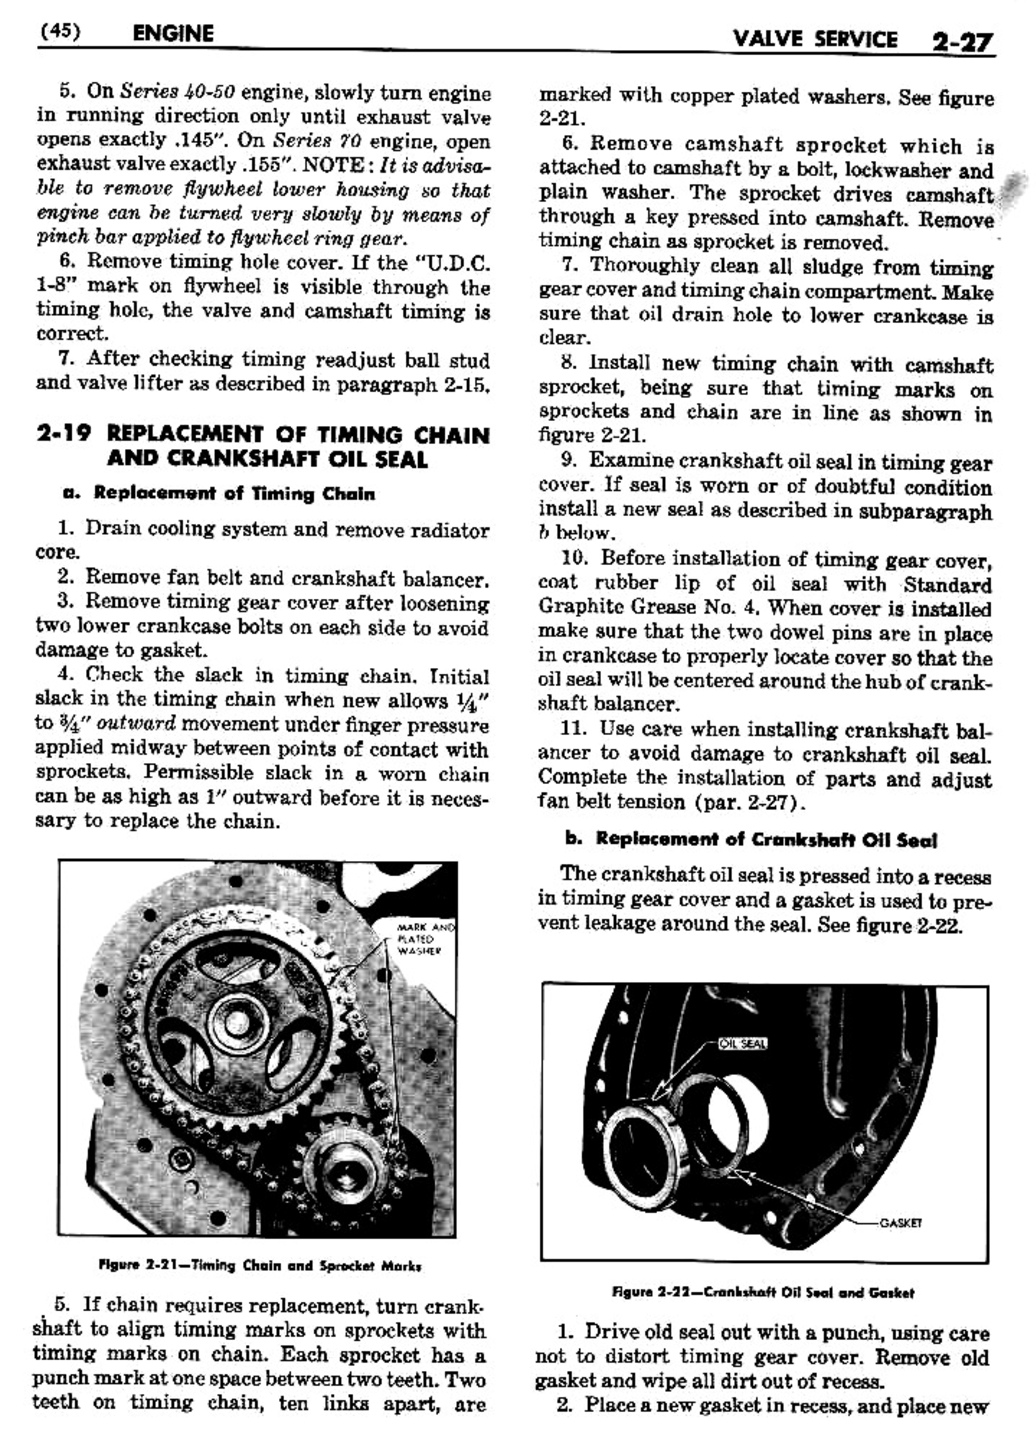 n_03 1950 Buick Shop Manual - Engine-027-027.jpg